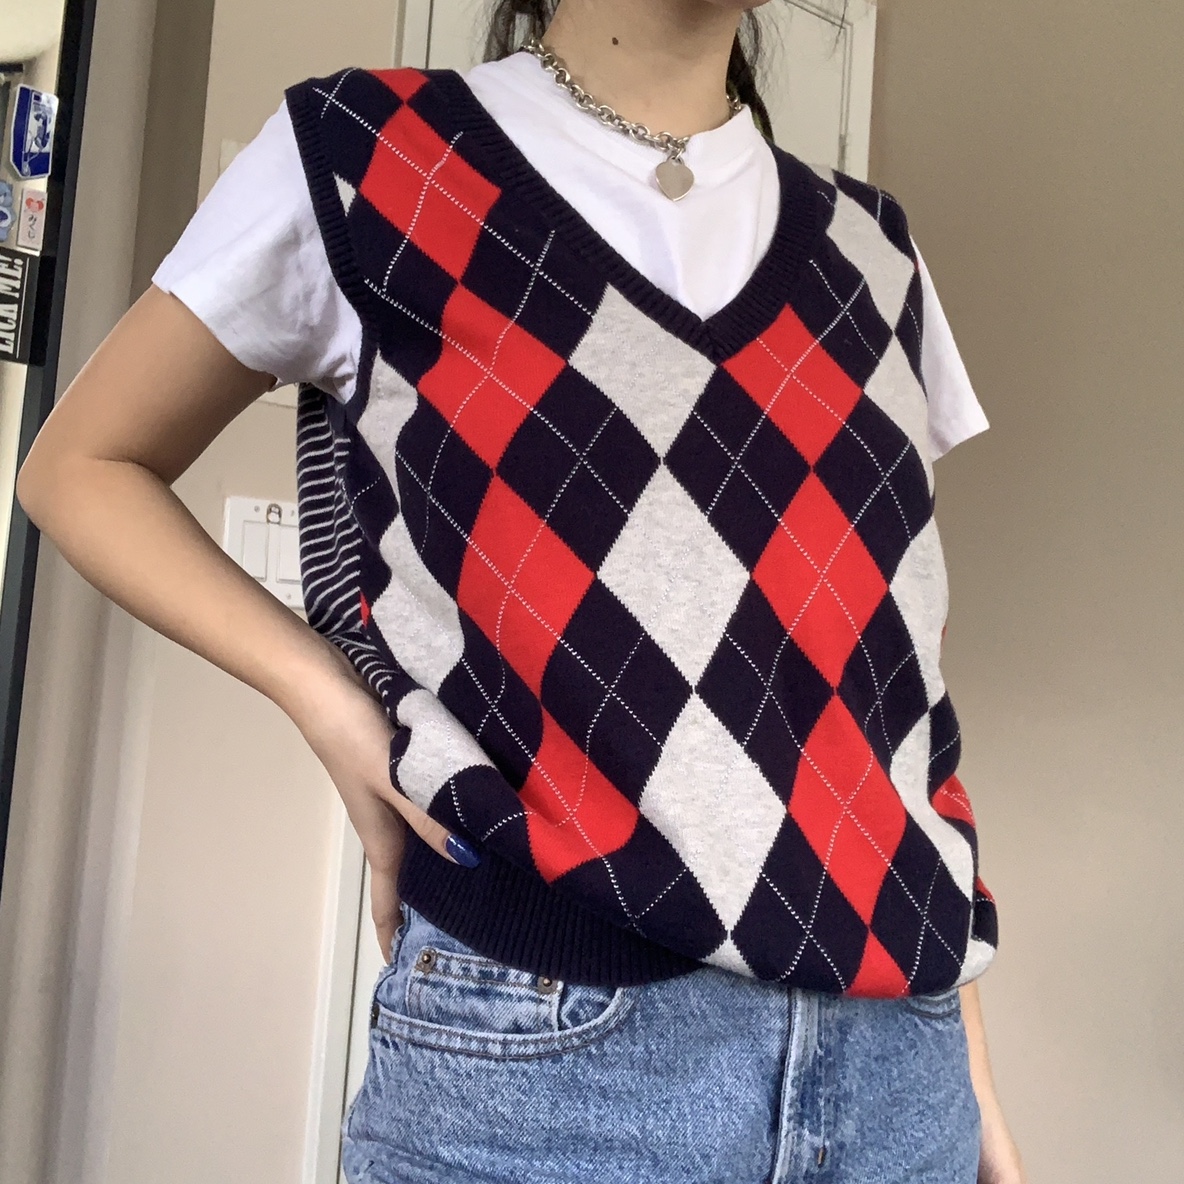 The Sweater Trend That's Making a Big Comeback - FabFitFun